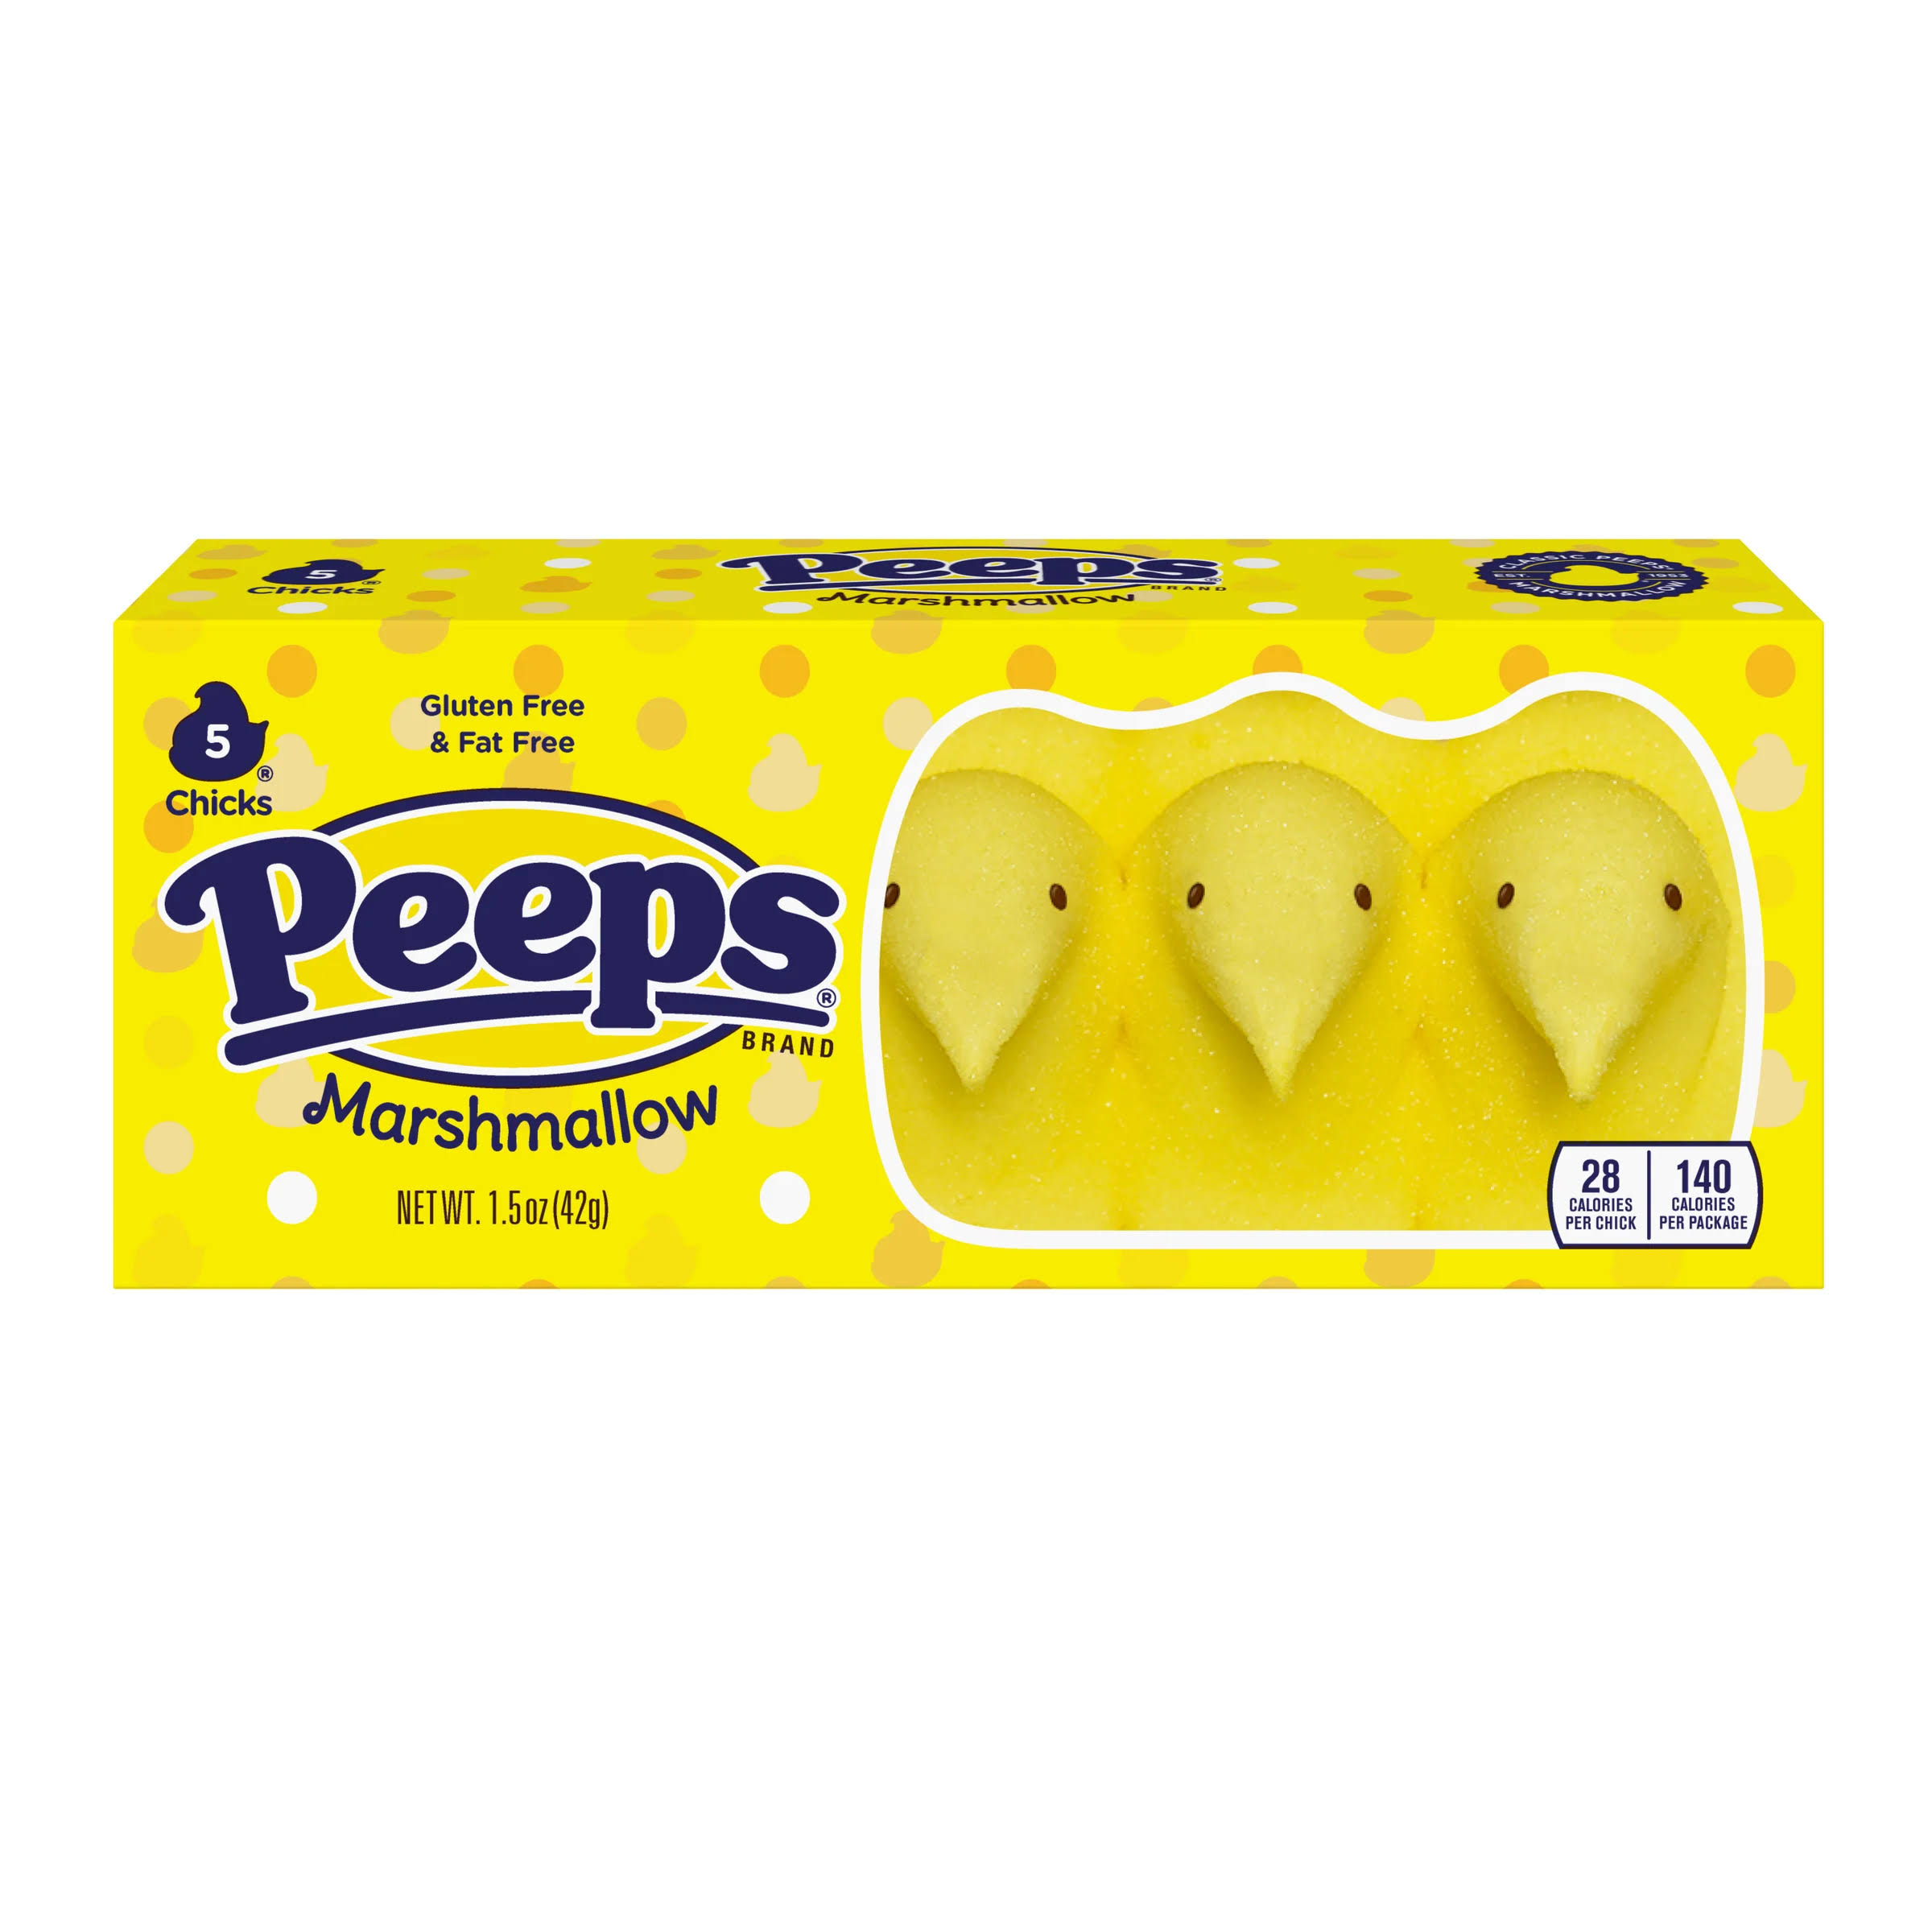 Peeps Marshmallow - Yellow Chicks